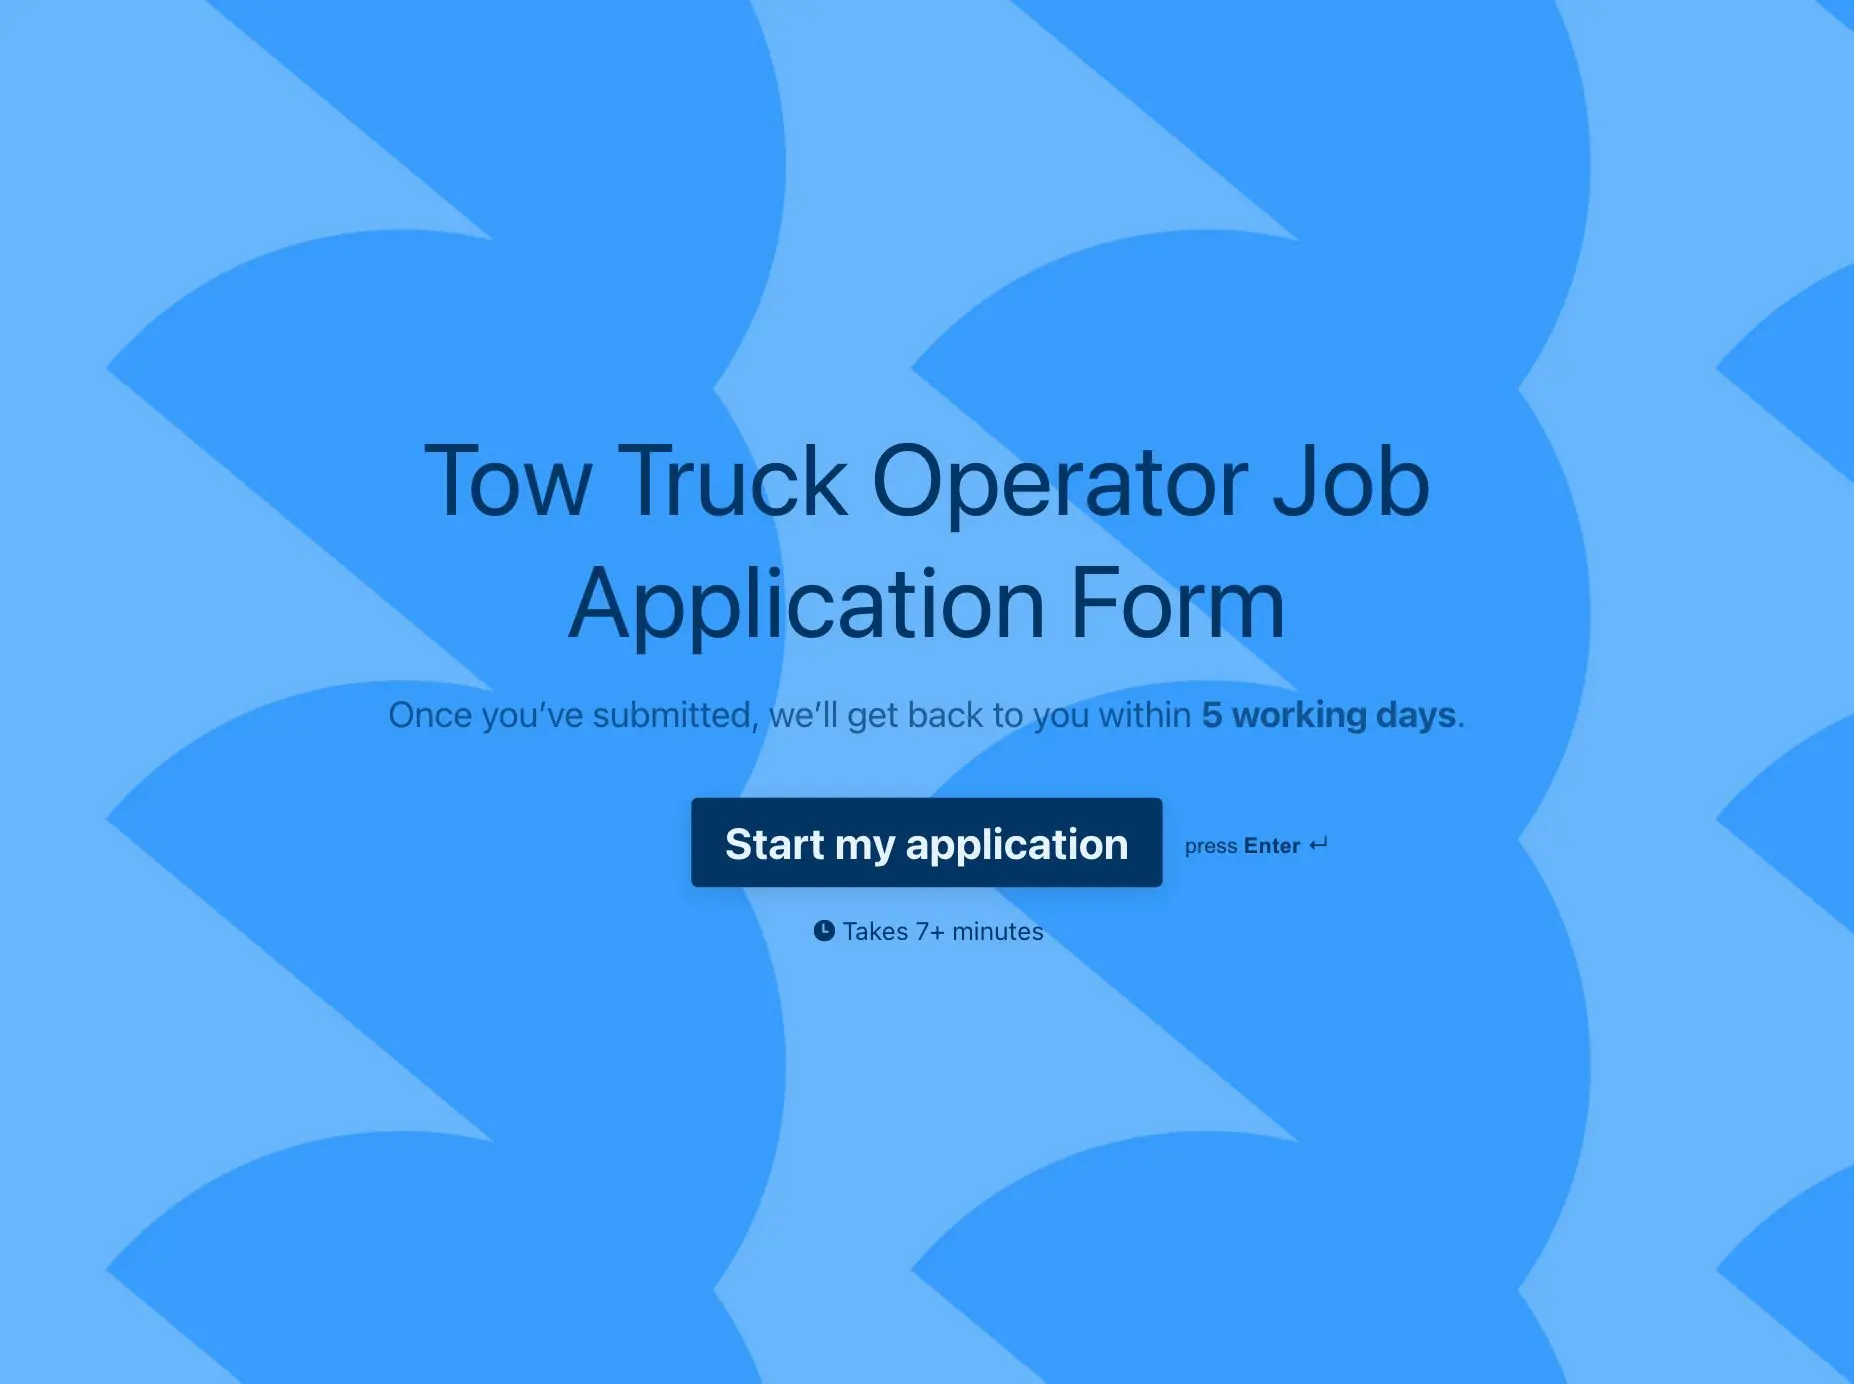 Tow Truck Operator Job Application Form Template Hero